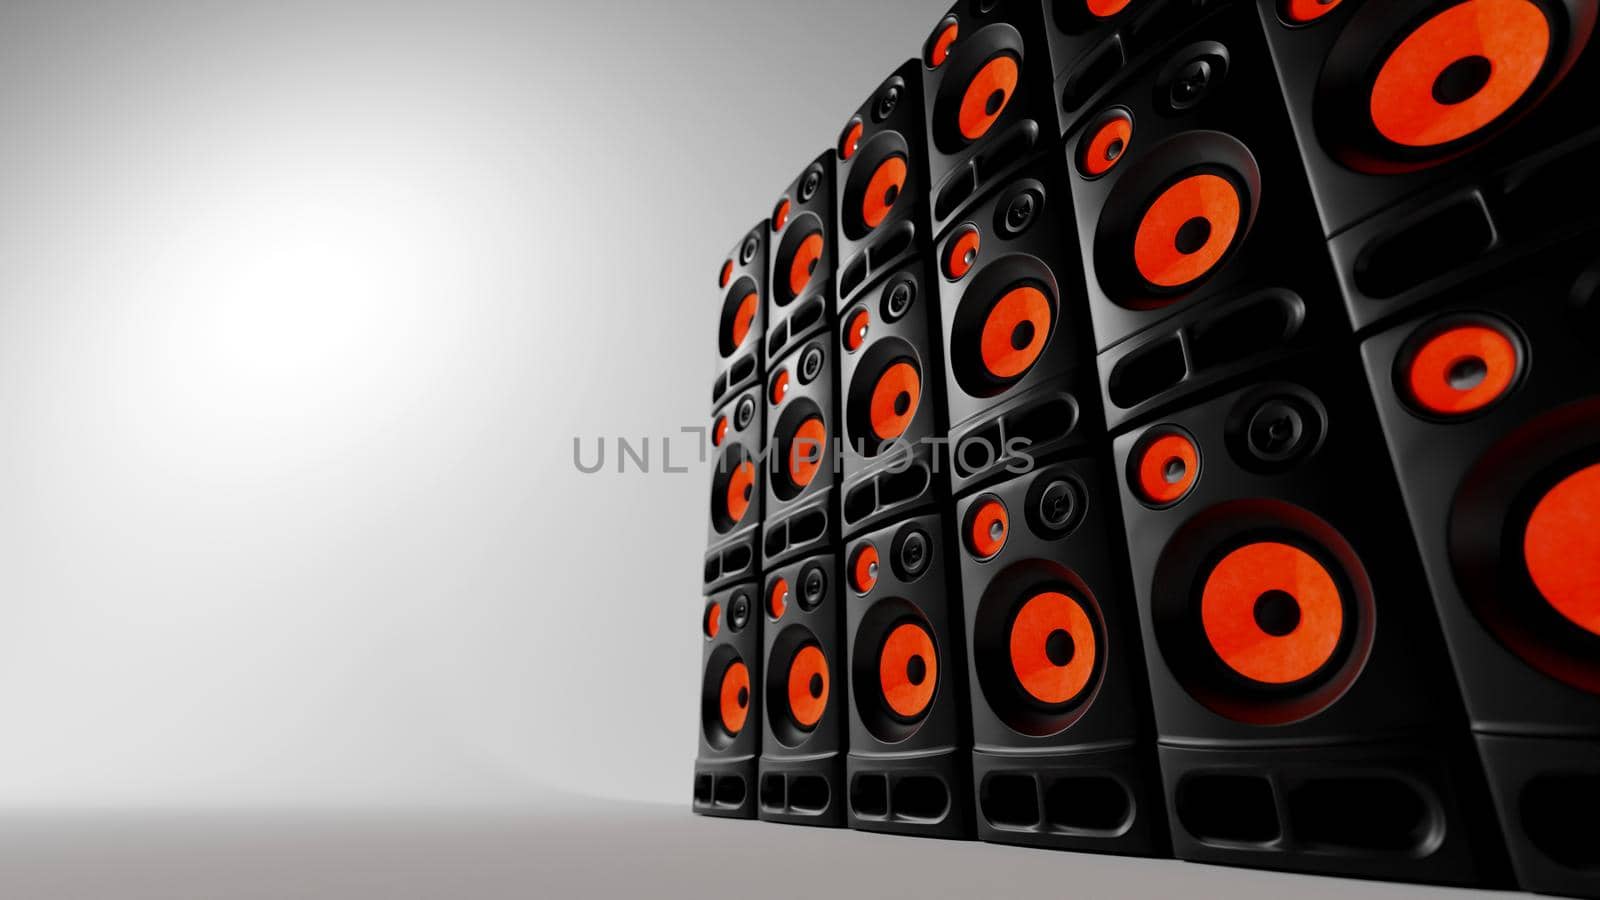 Wall of loudspeakers on white background. Music concert, recording studio concept. Digital 3D render. by hernan_hyper